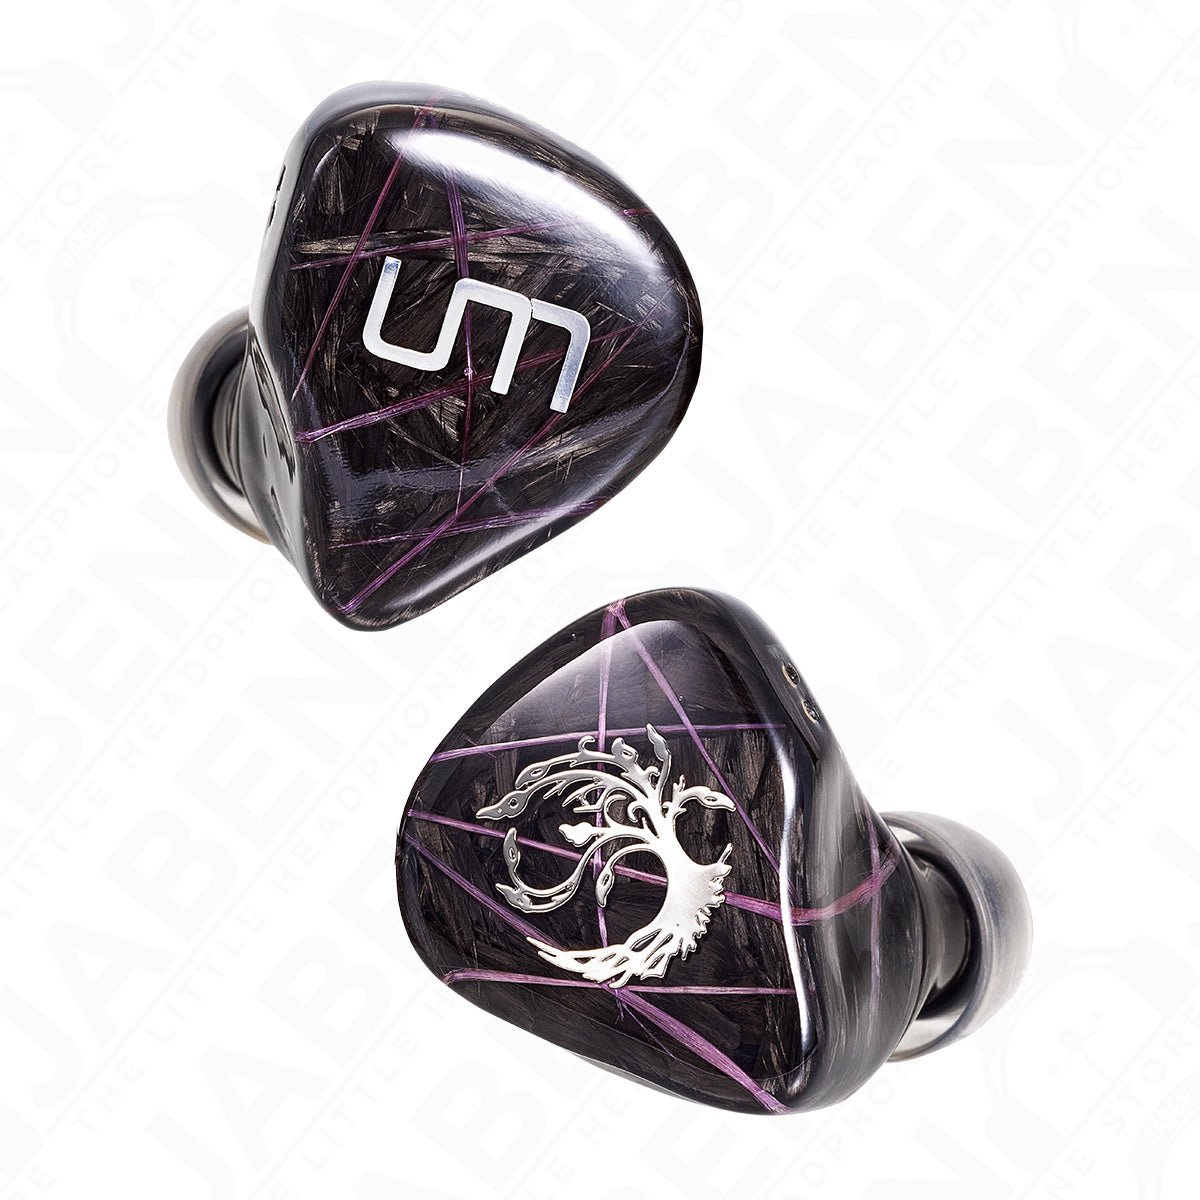 Unique Melody UM Mason Fusang Universal In-Ear Monitor